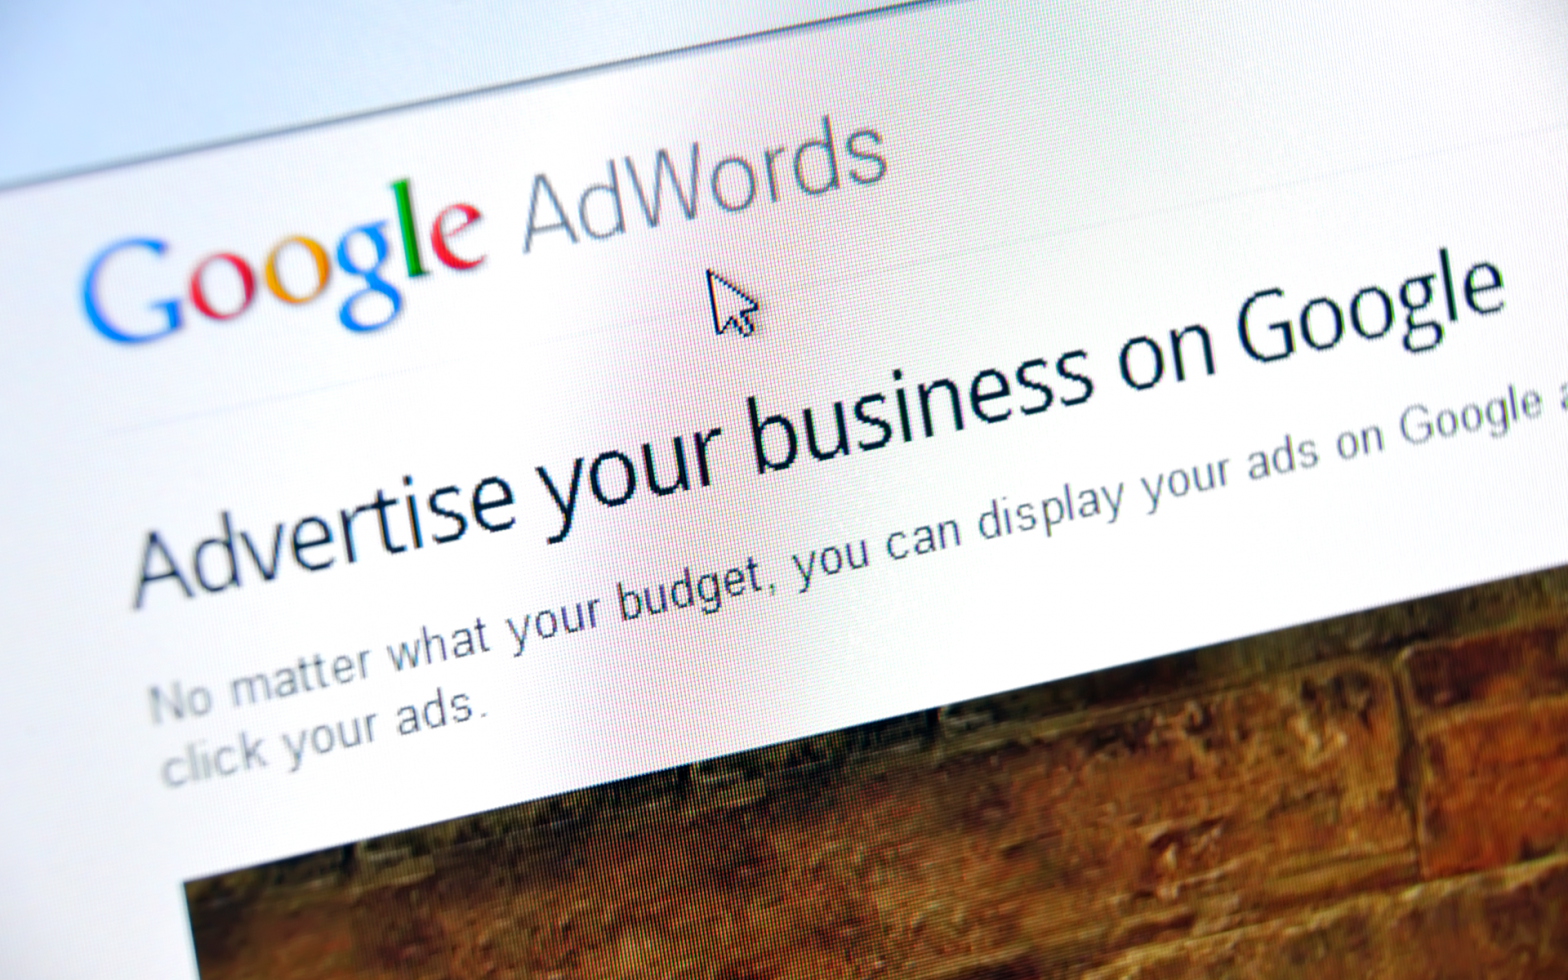 Google AdWords Keyword Match Types